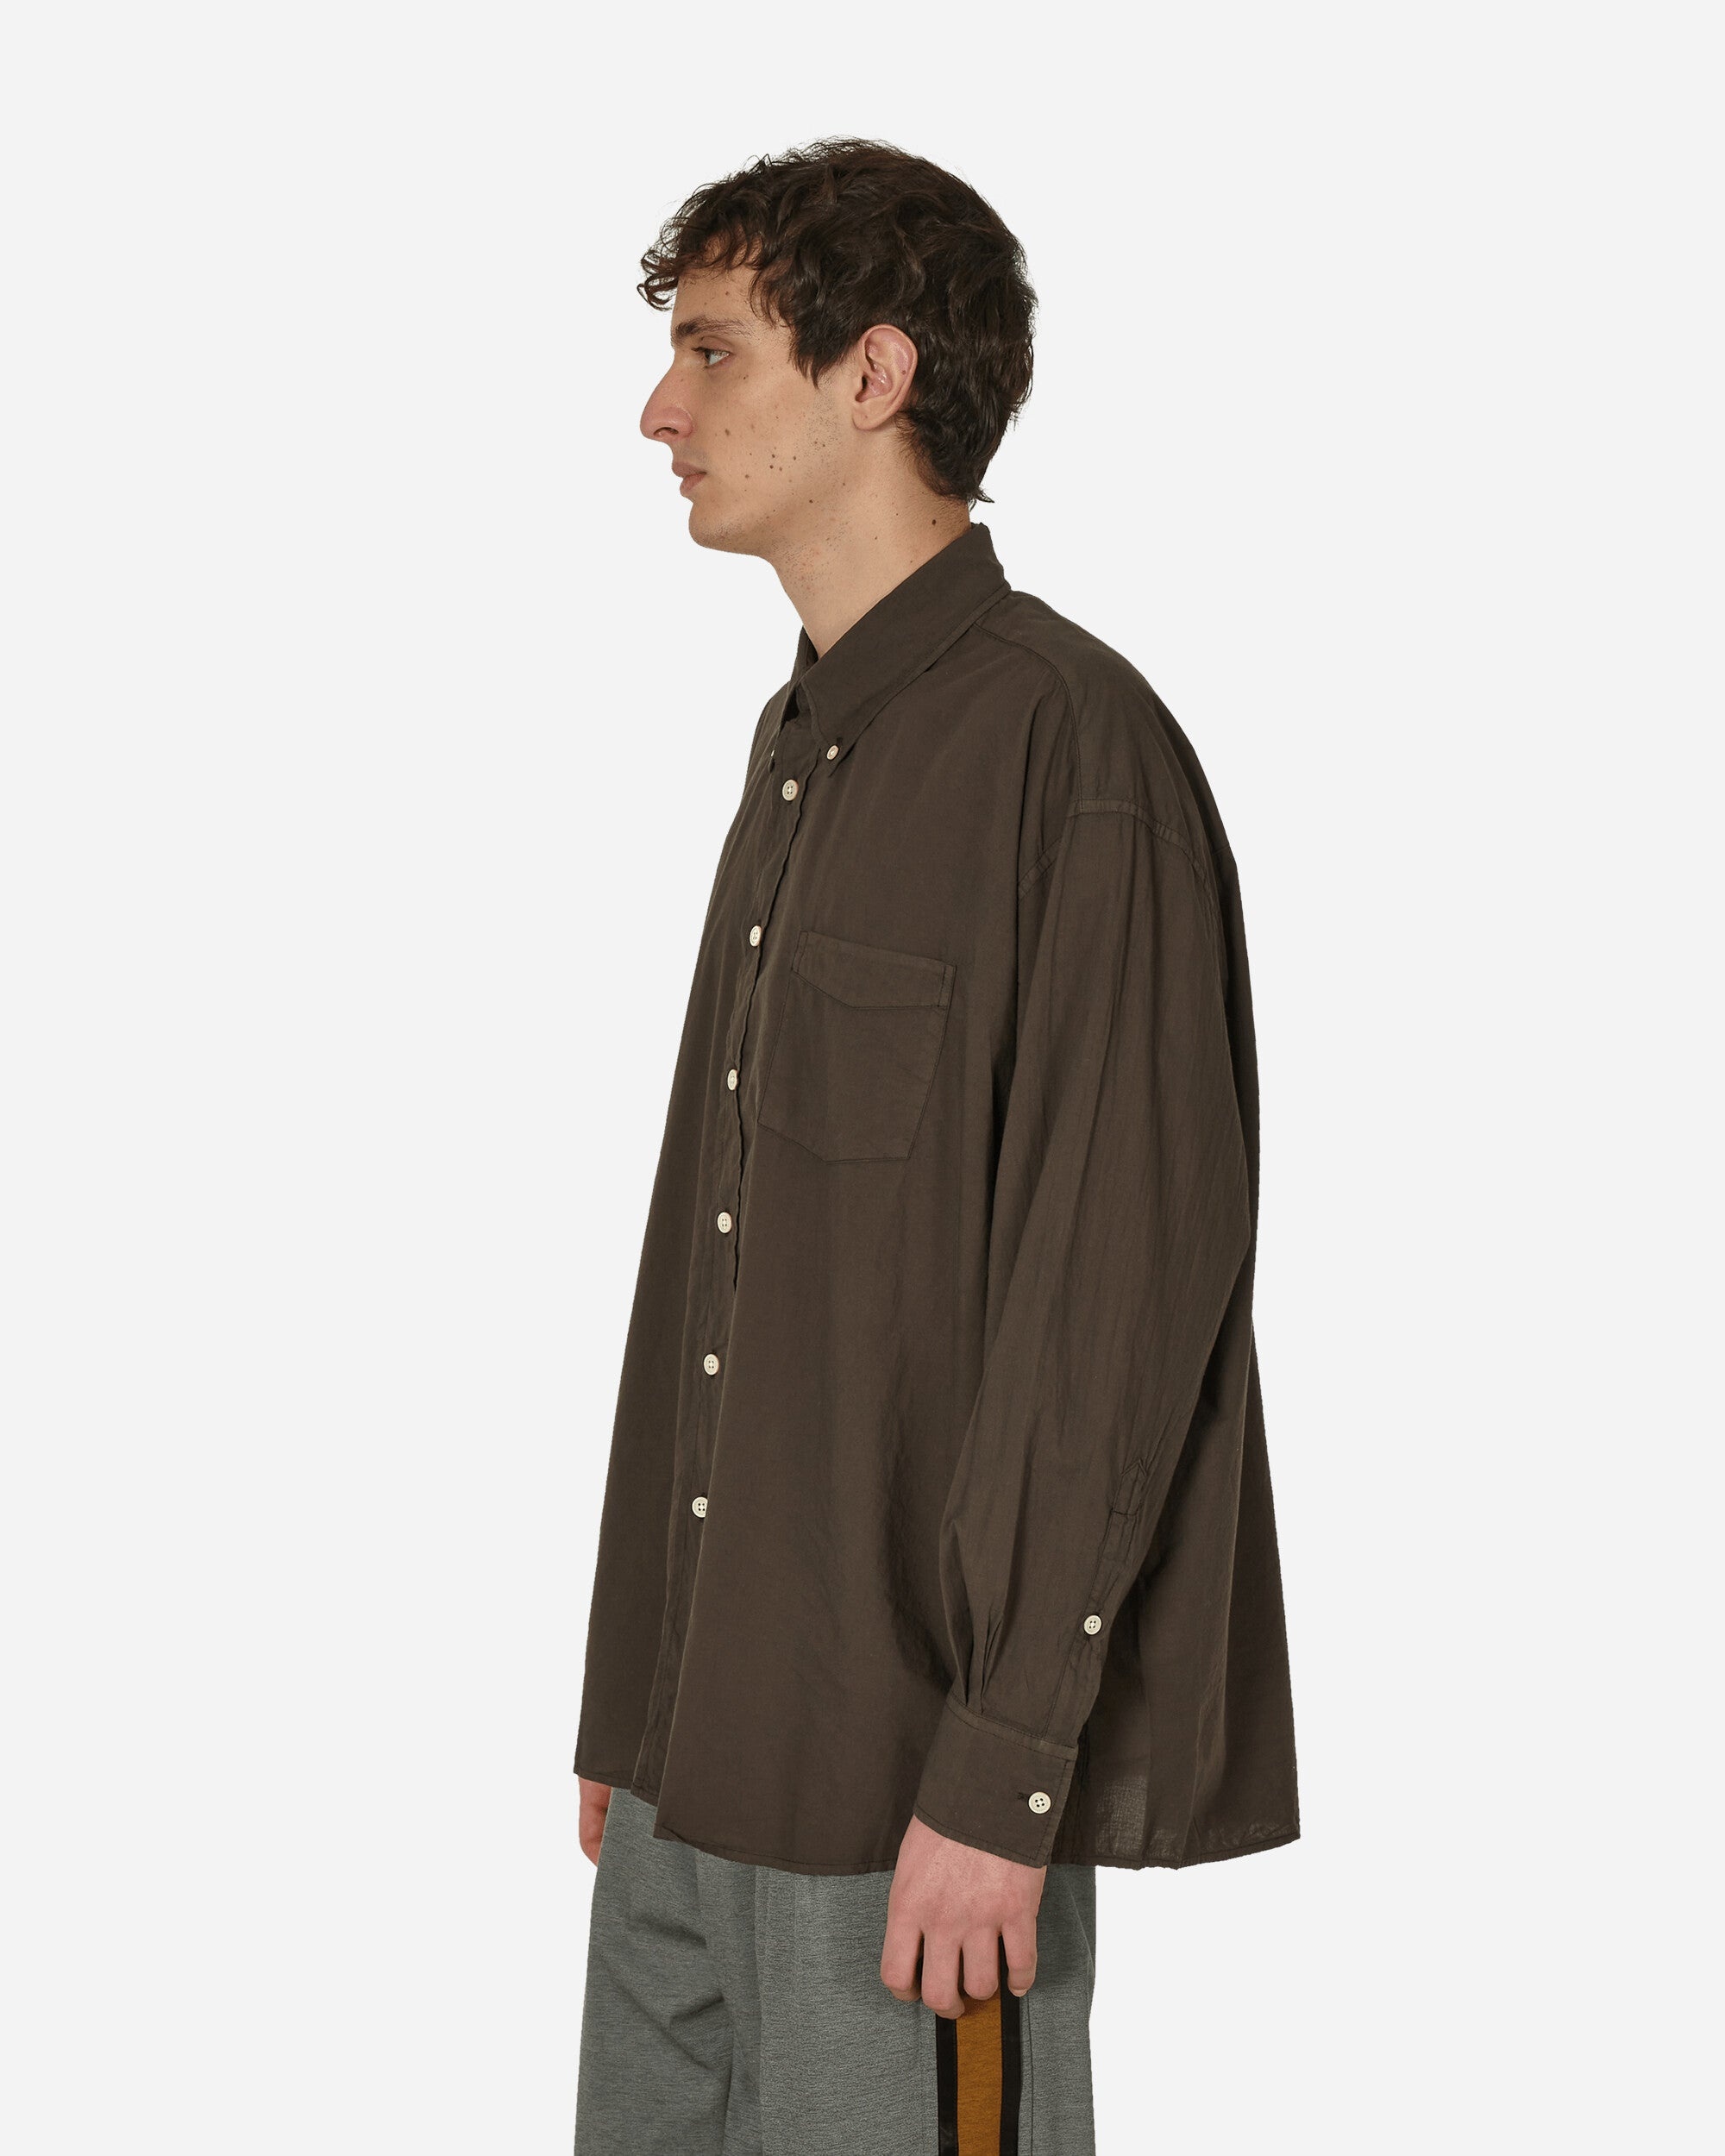 Borrowed BD Shirt Faded Brown - 2